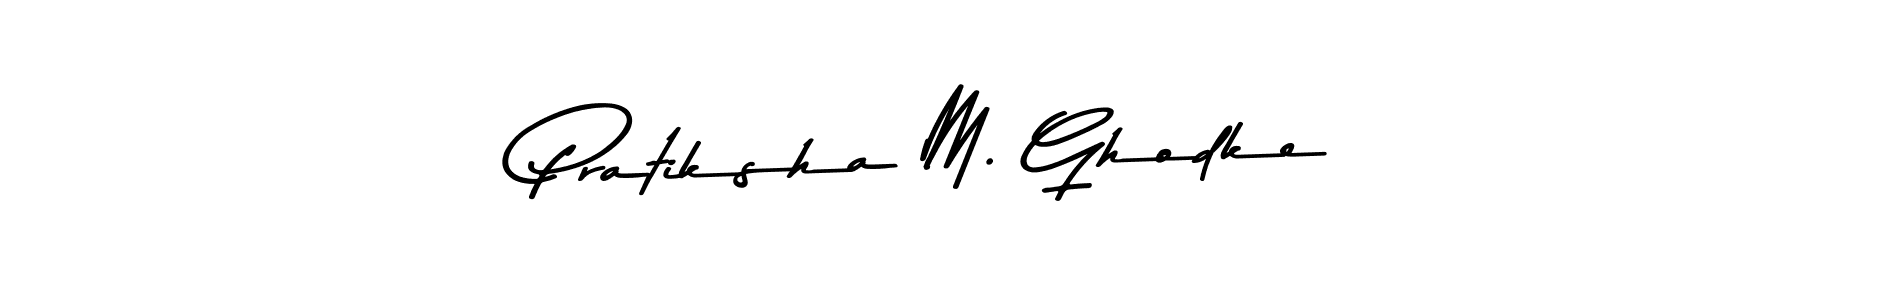 How to Draw Pratiksha M. Ghodke signature style? Asem Kandis PERSONAL USE is a latest design signature styles for name Pratiksha M. Ghodke. Pratiksha M. Ghodke signature style 9 images and pictures png